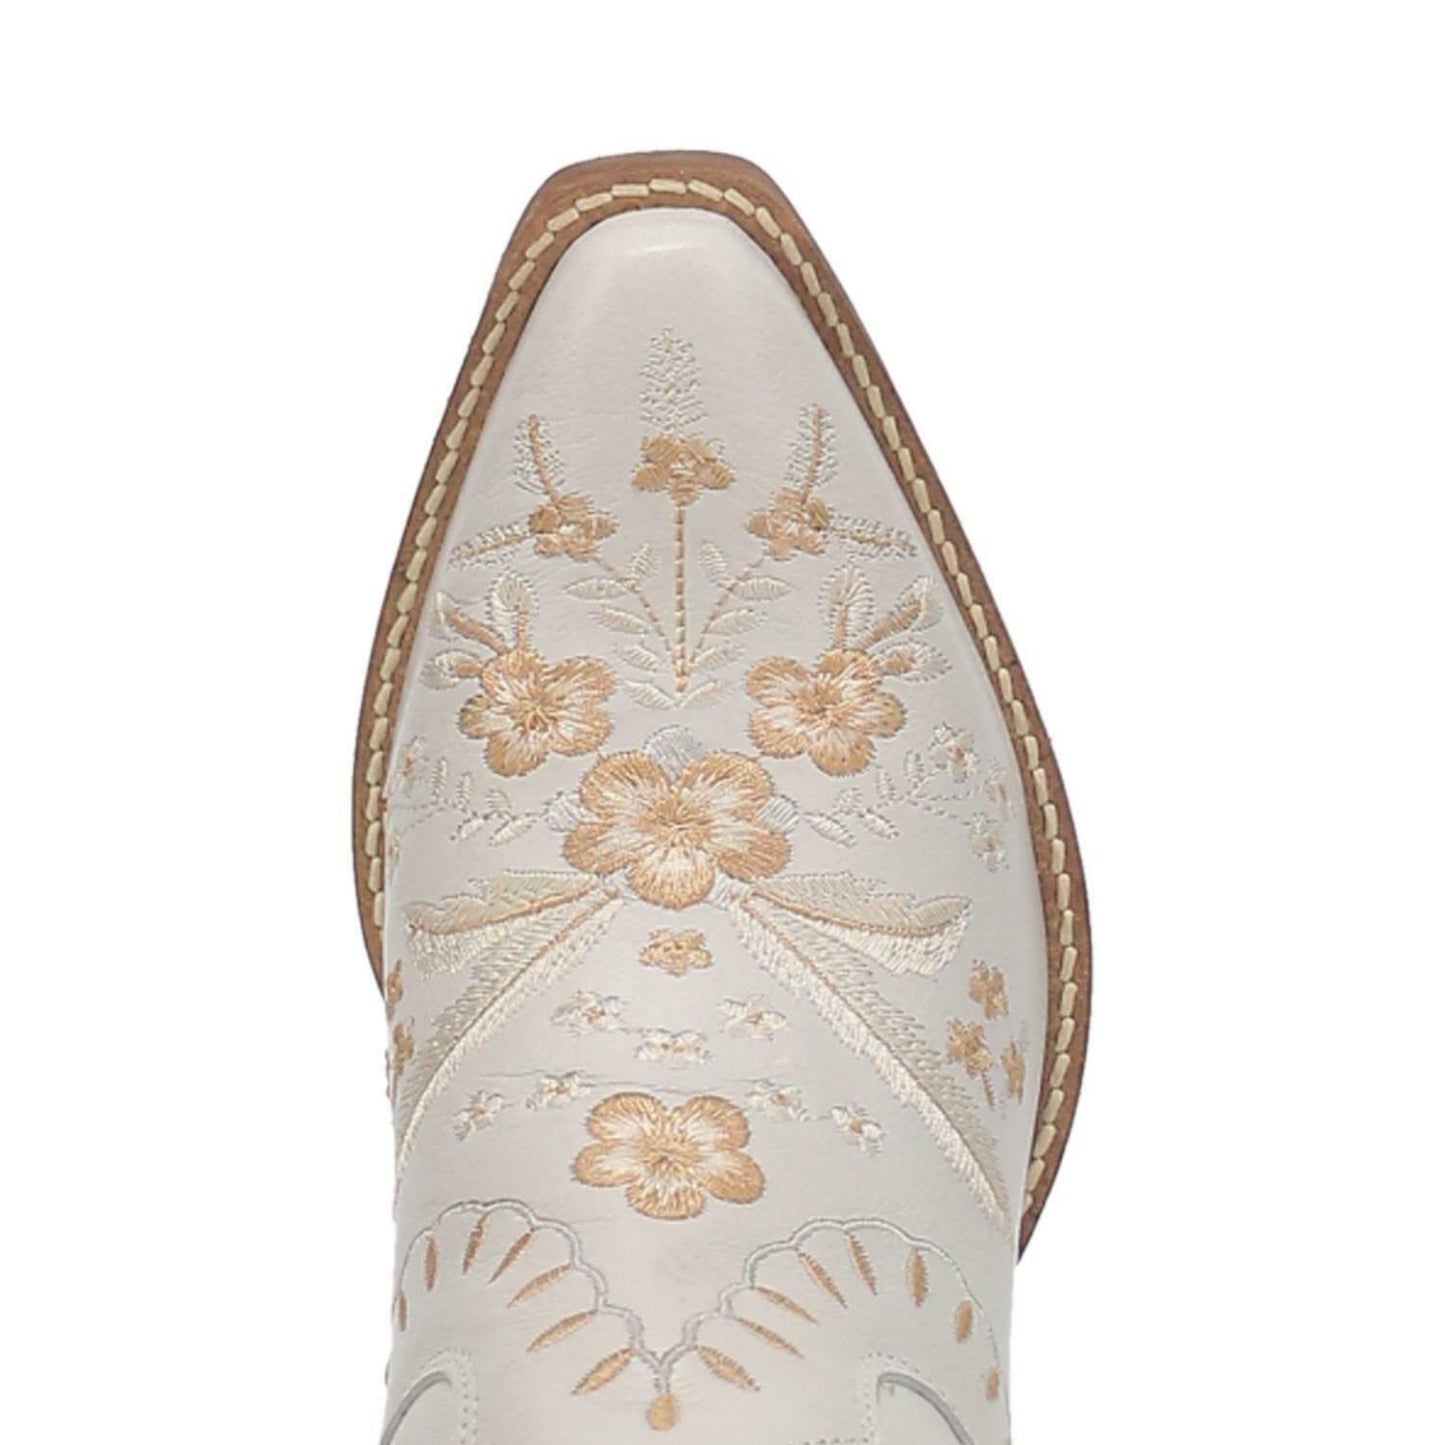 Dingo Ladies Primrose Floral Embroidery White Western Boots DI748 WHT